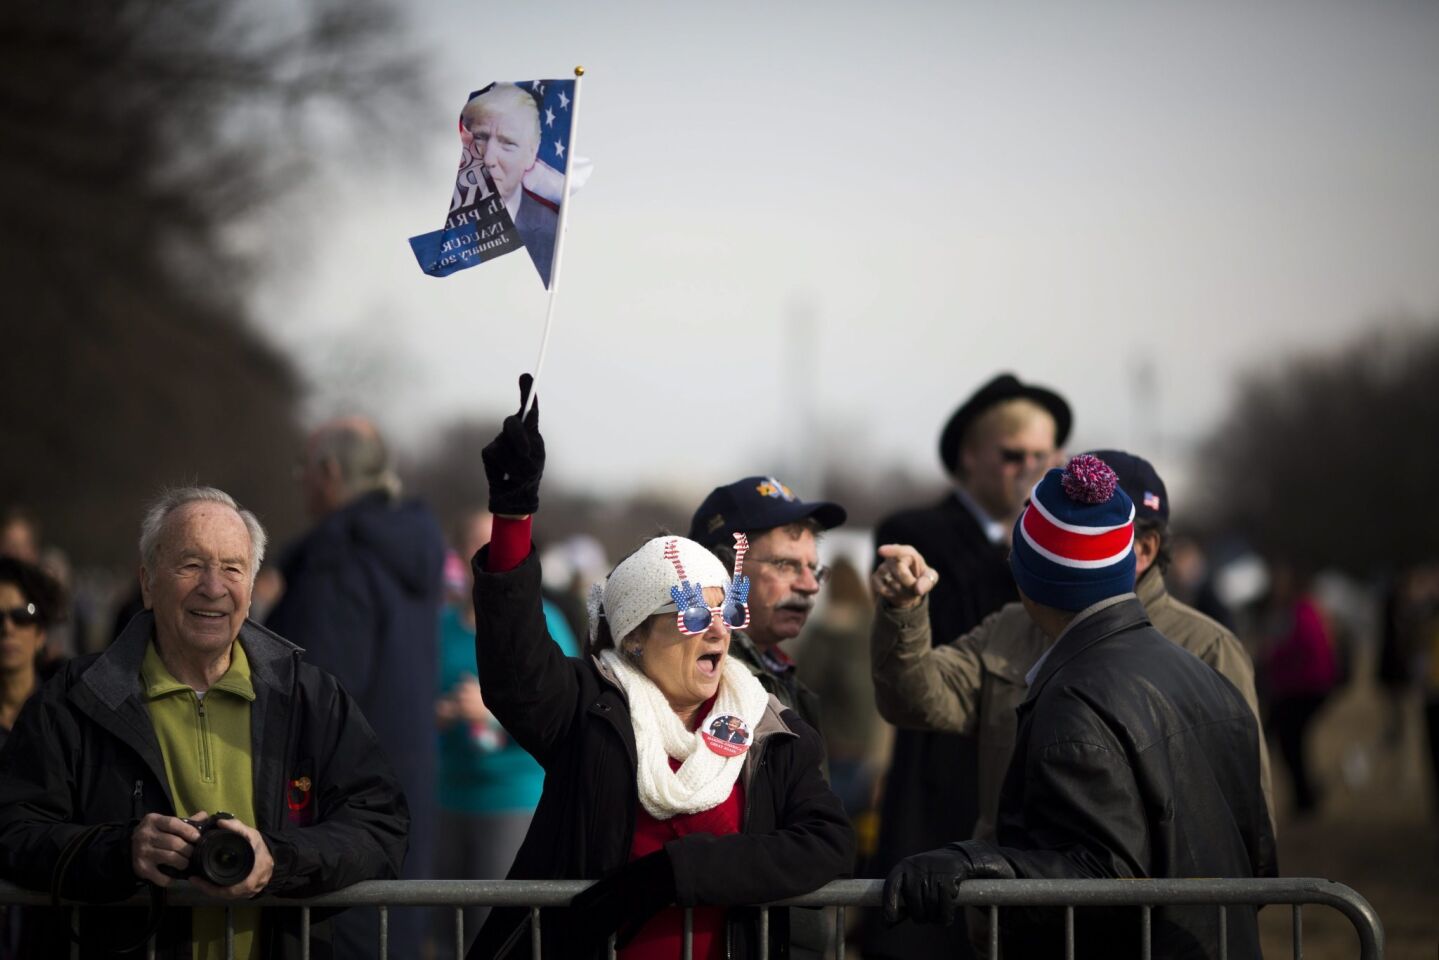 A woman waves a flag.